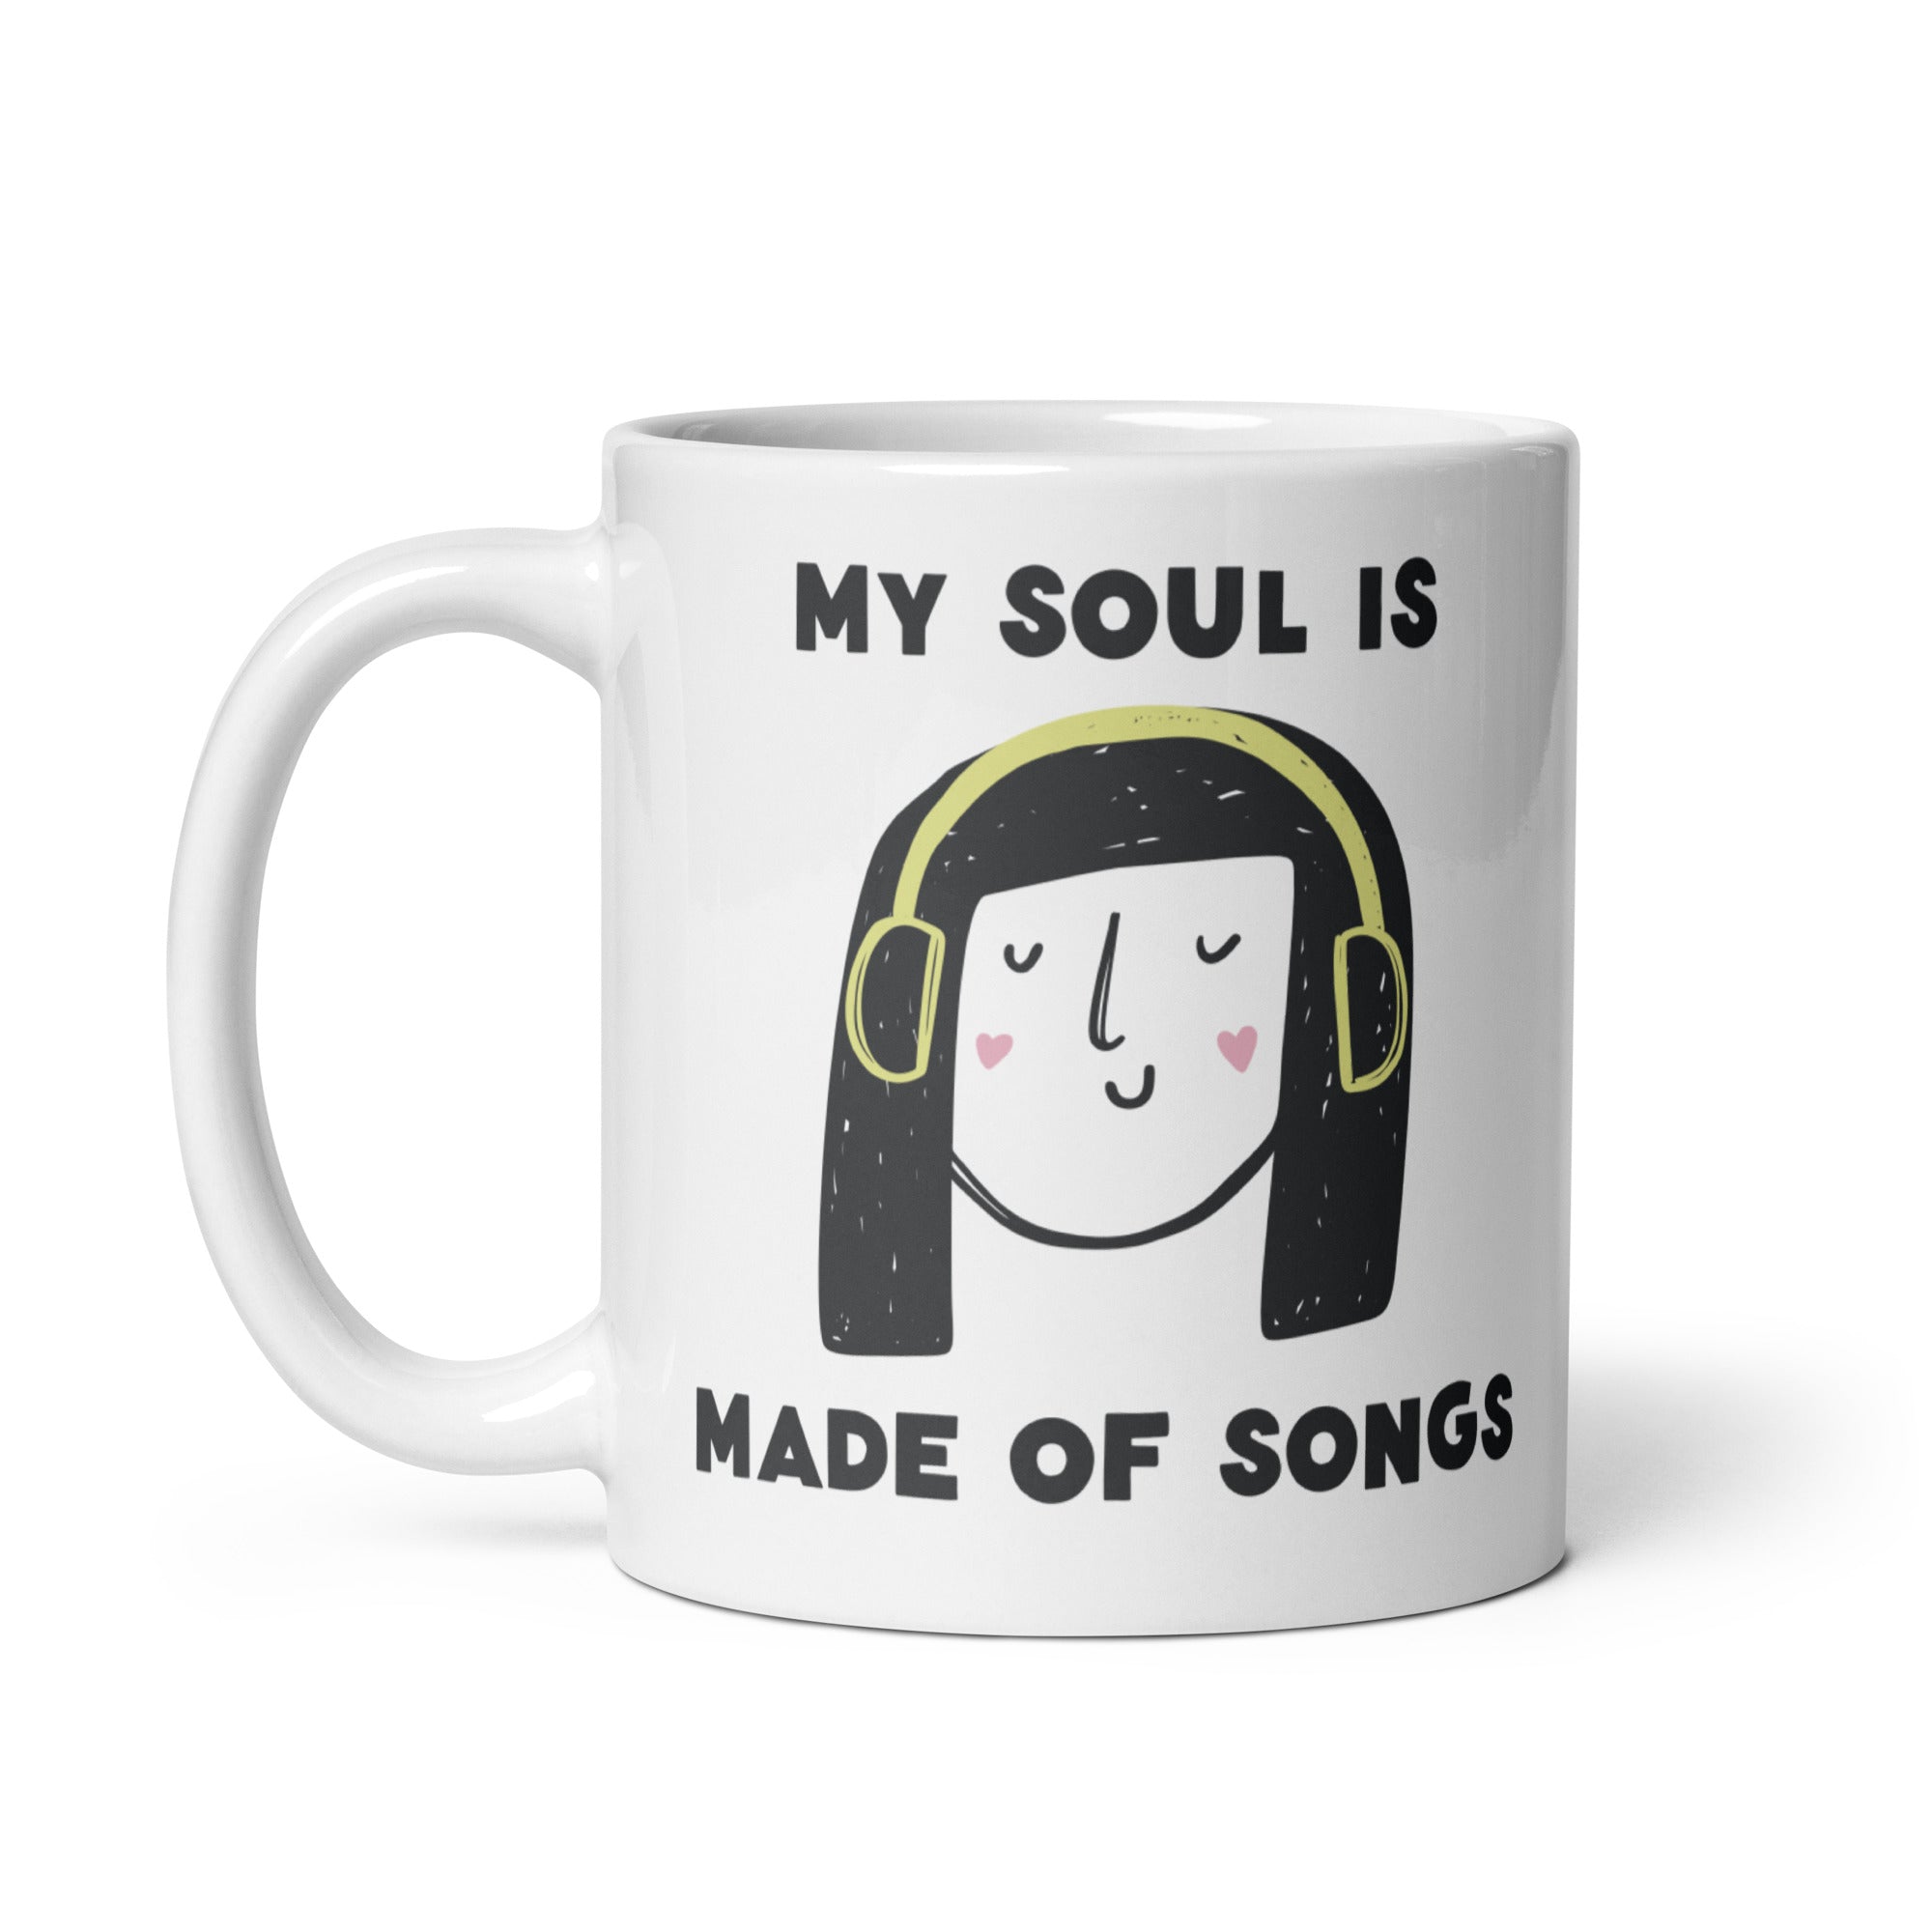 Made of Songs - Mug